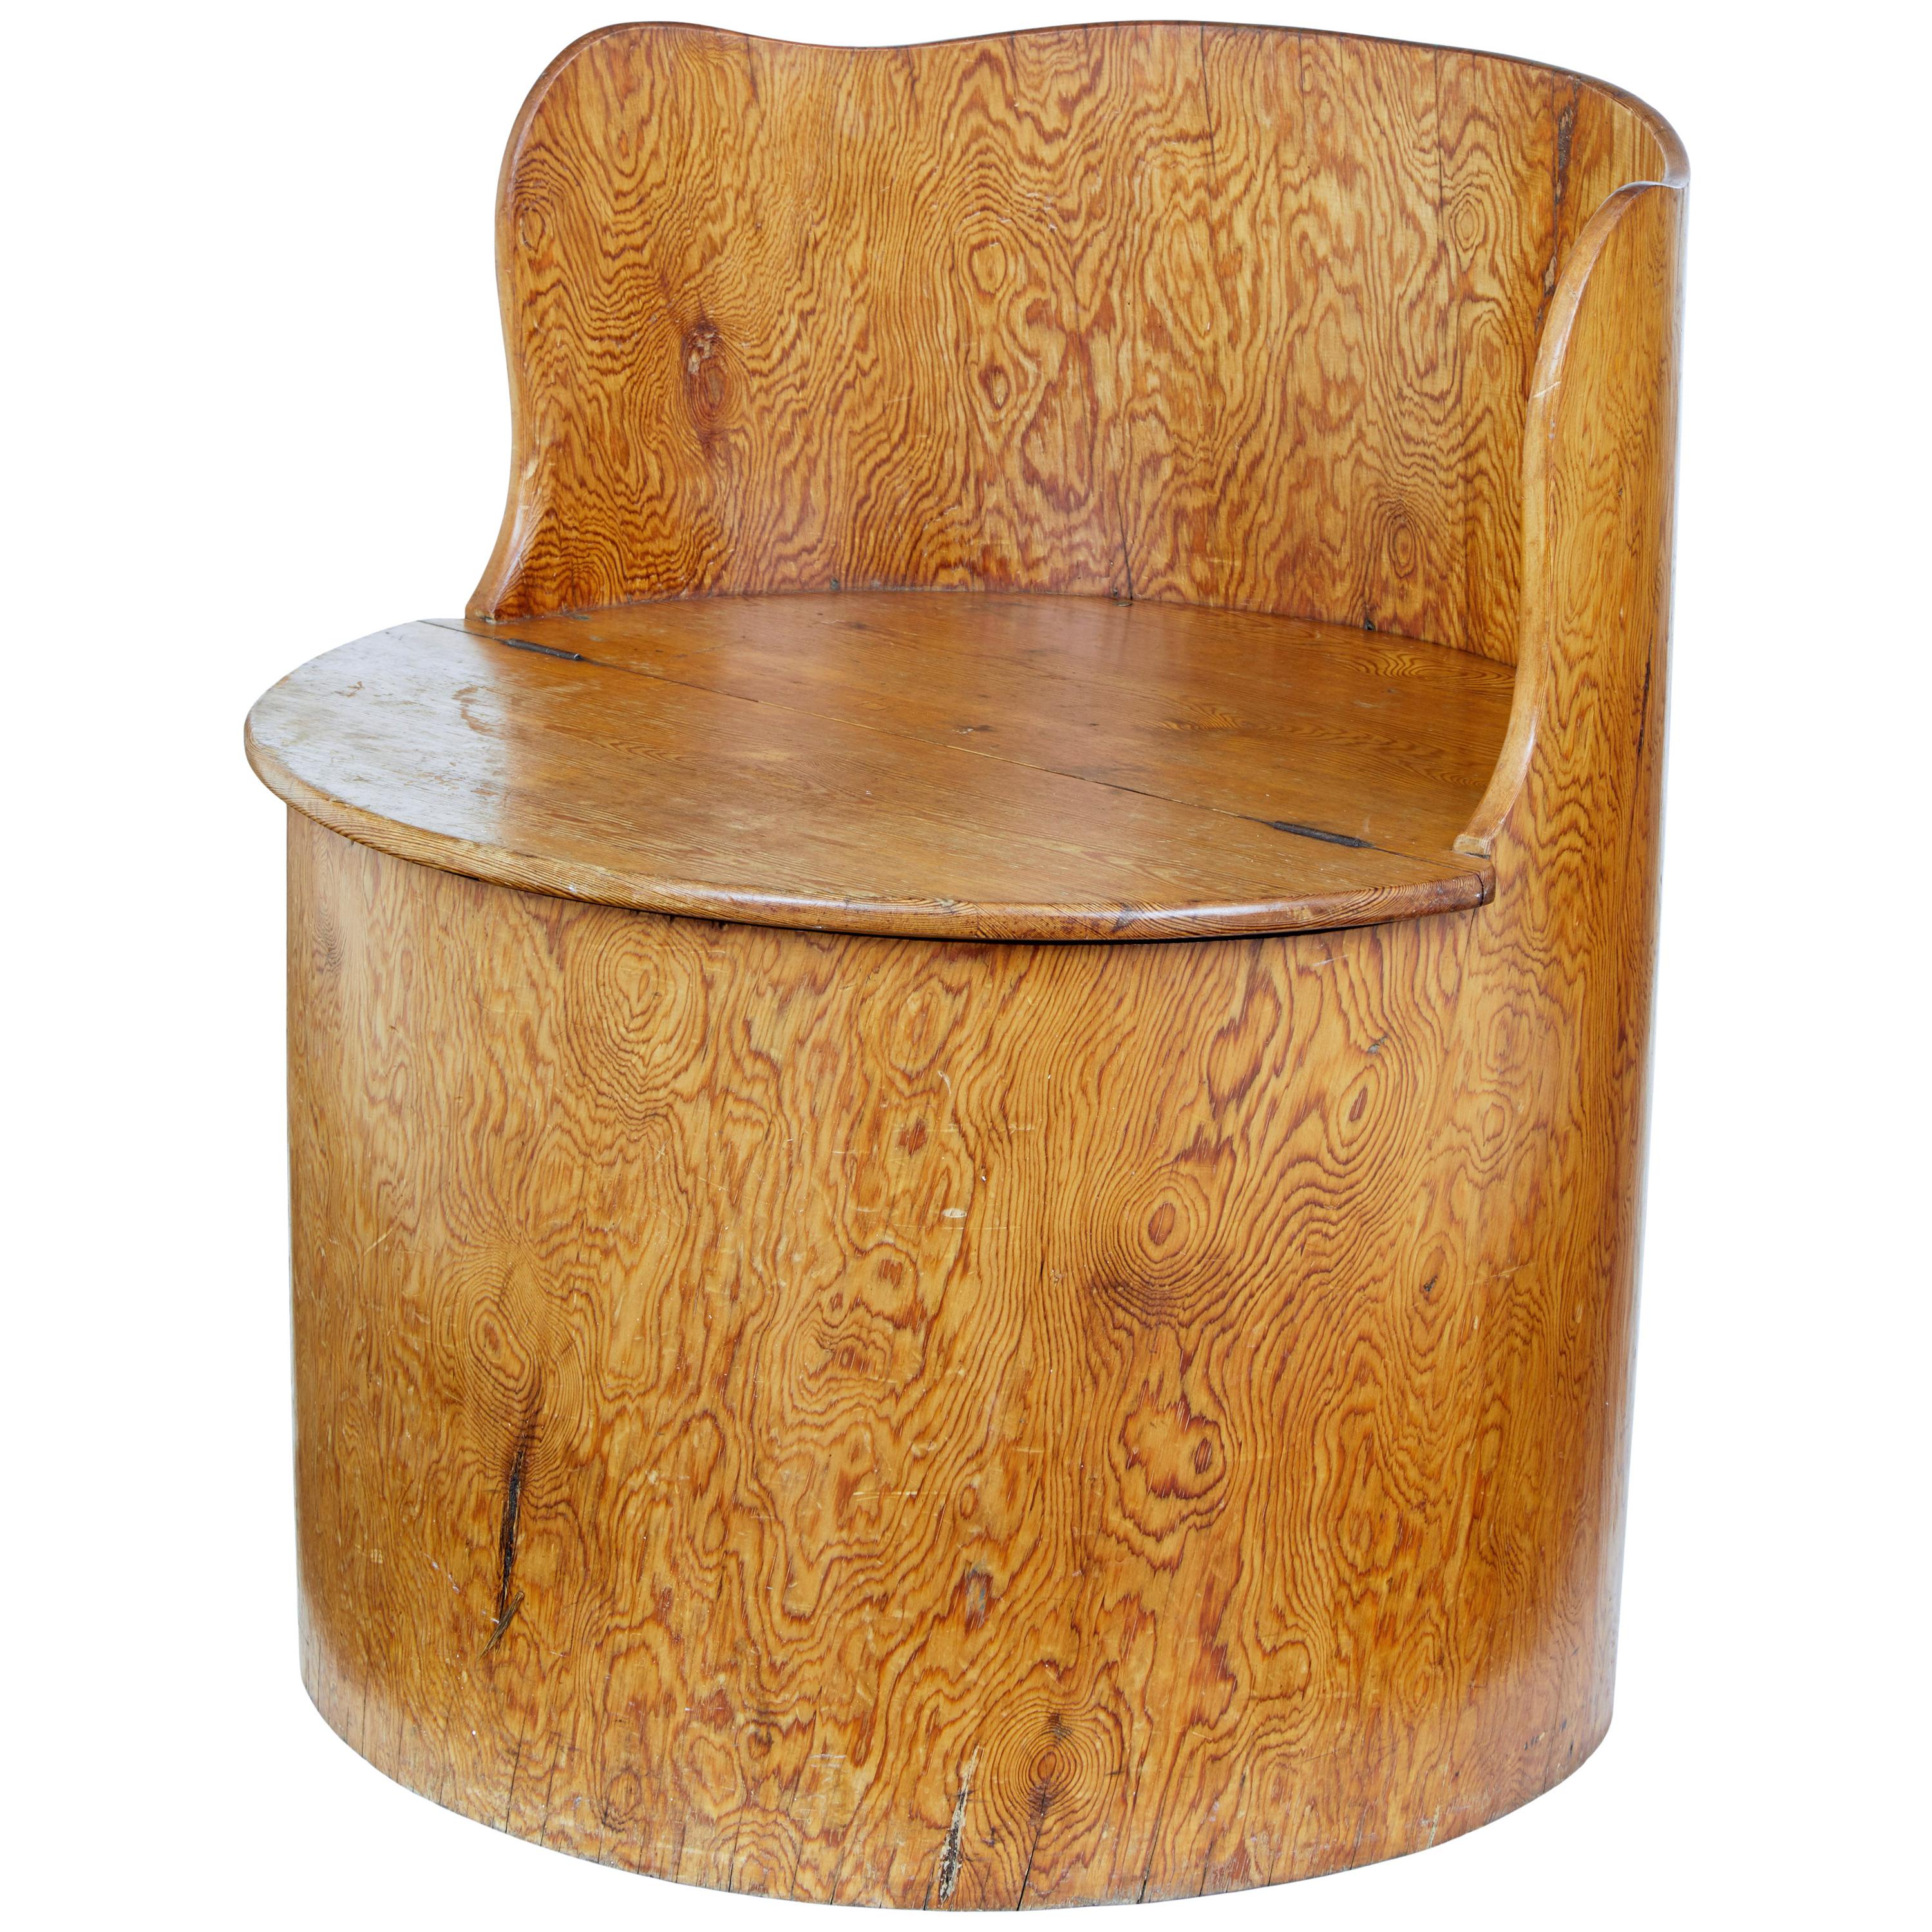 19th Century Pine Dug Out Chair